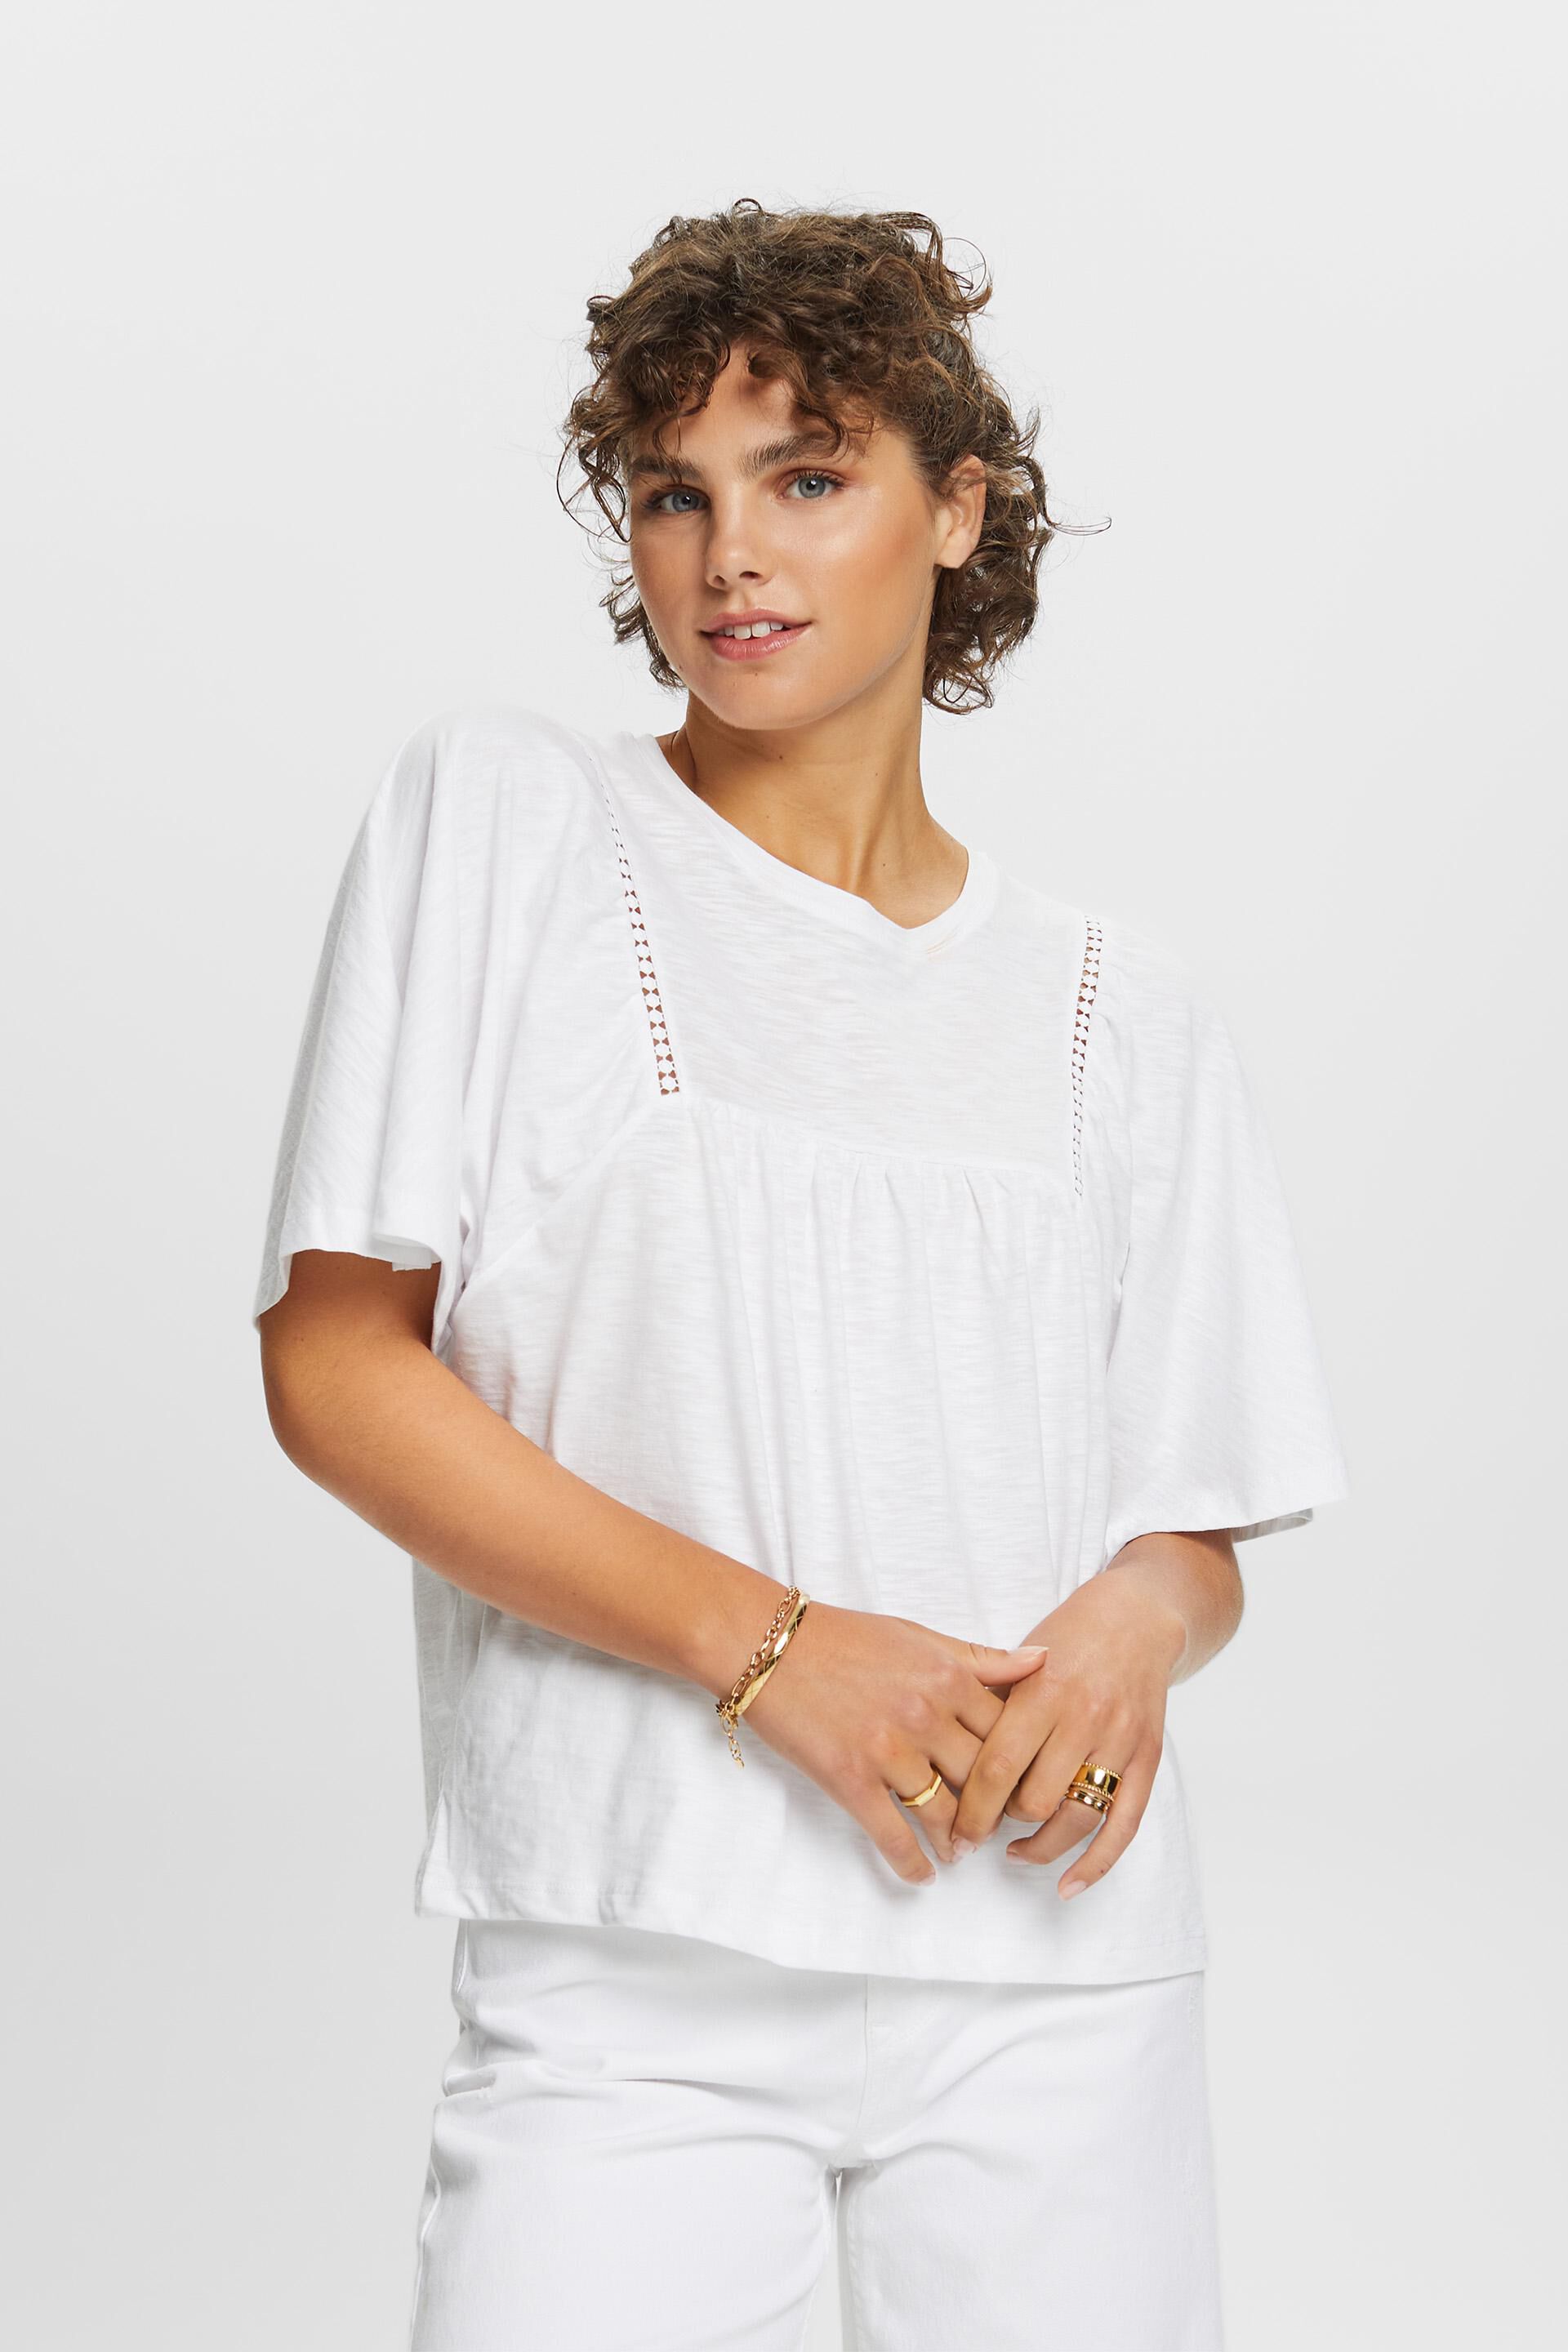 Esprit 100% cotton t-shirt, Flared